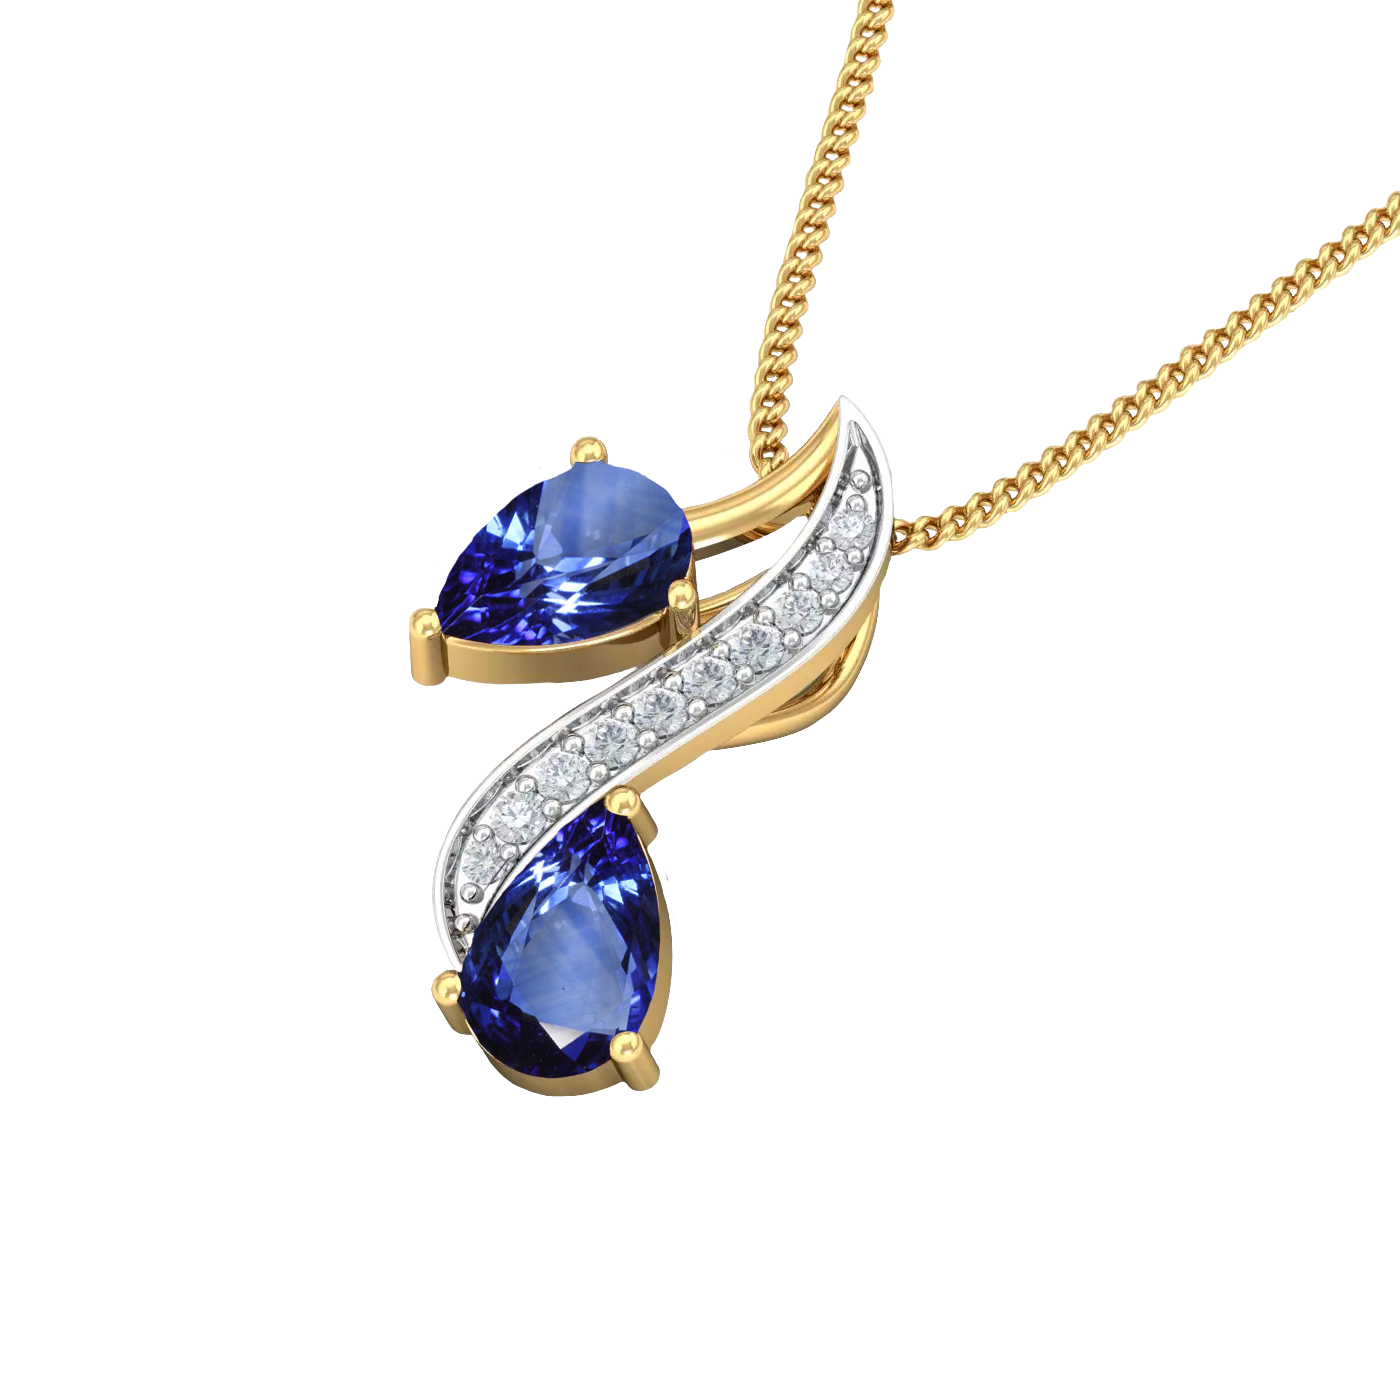 The Pear Shape Sapphire Pendant